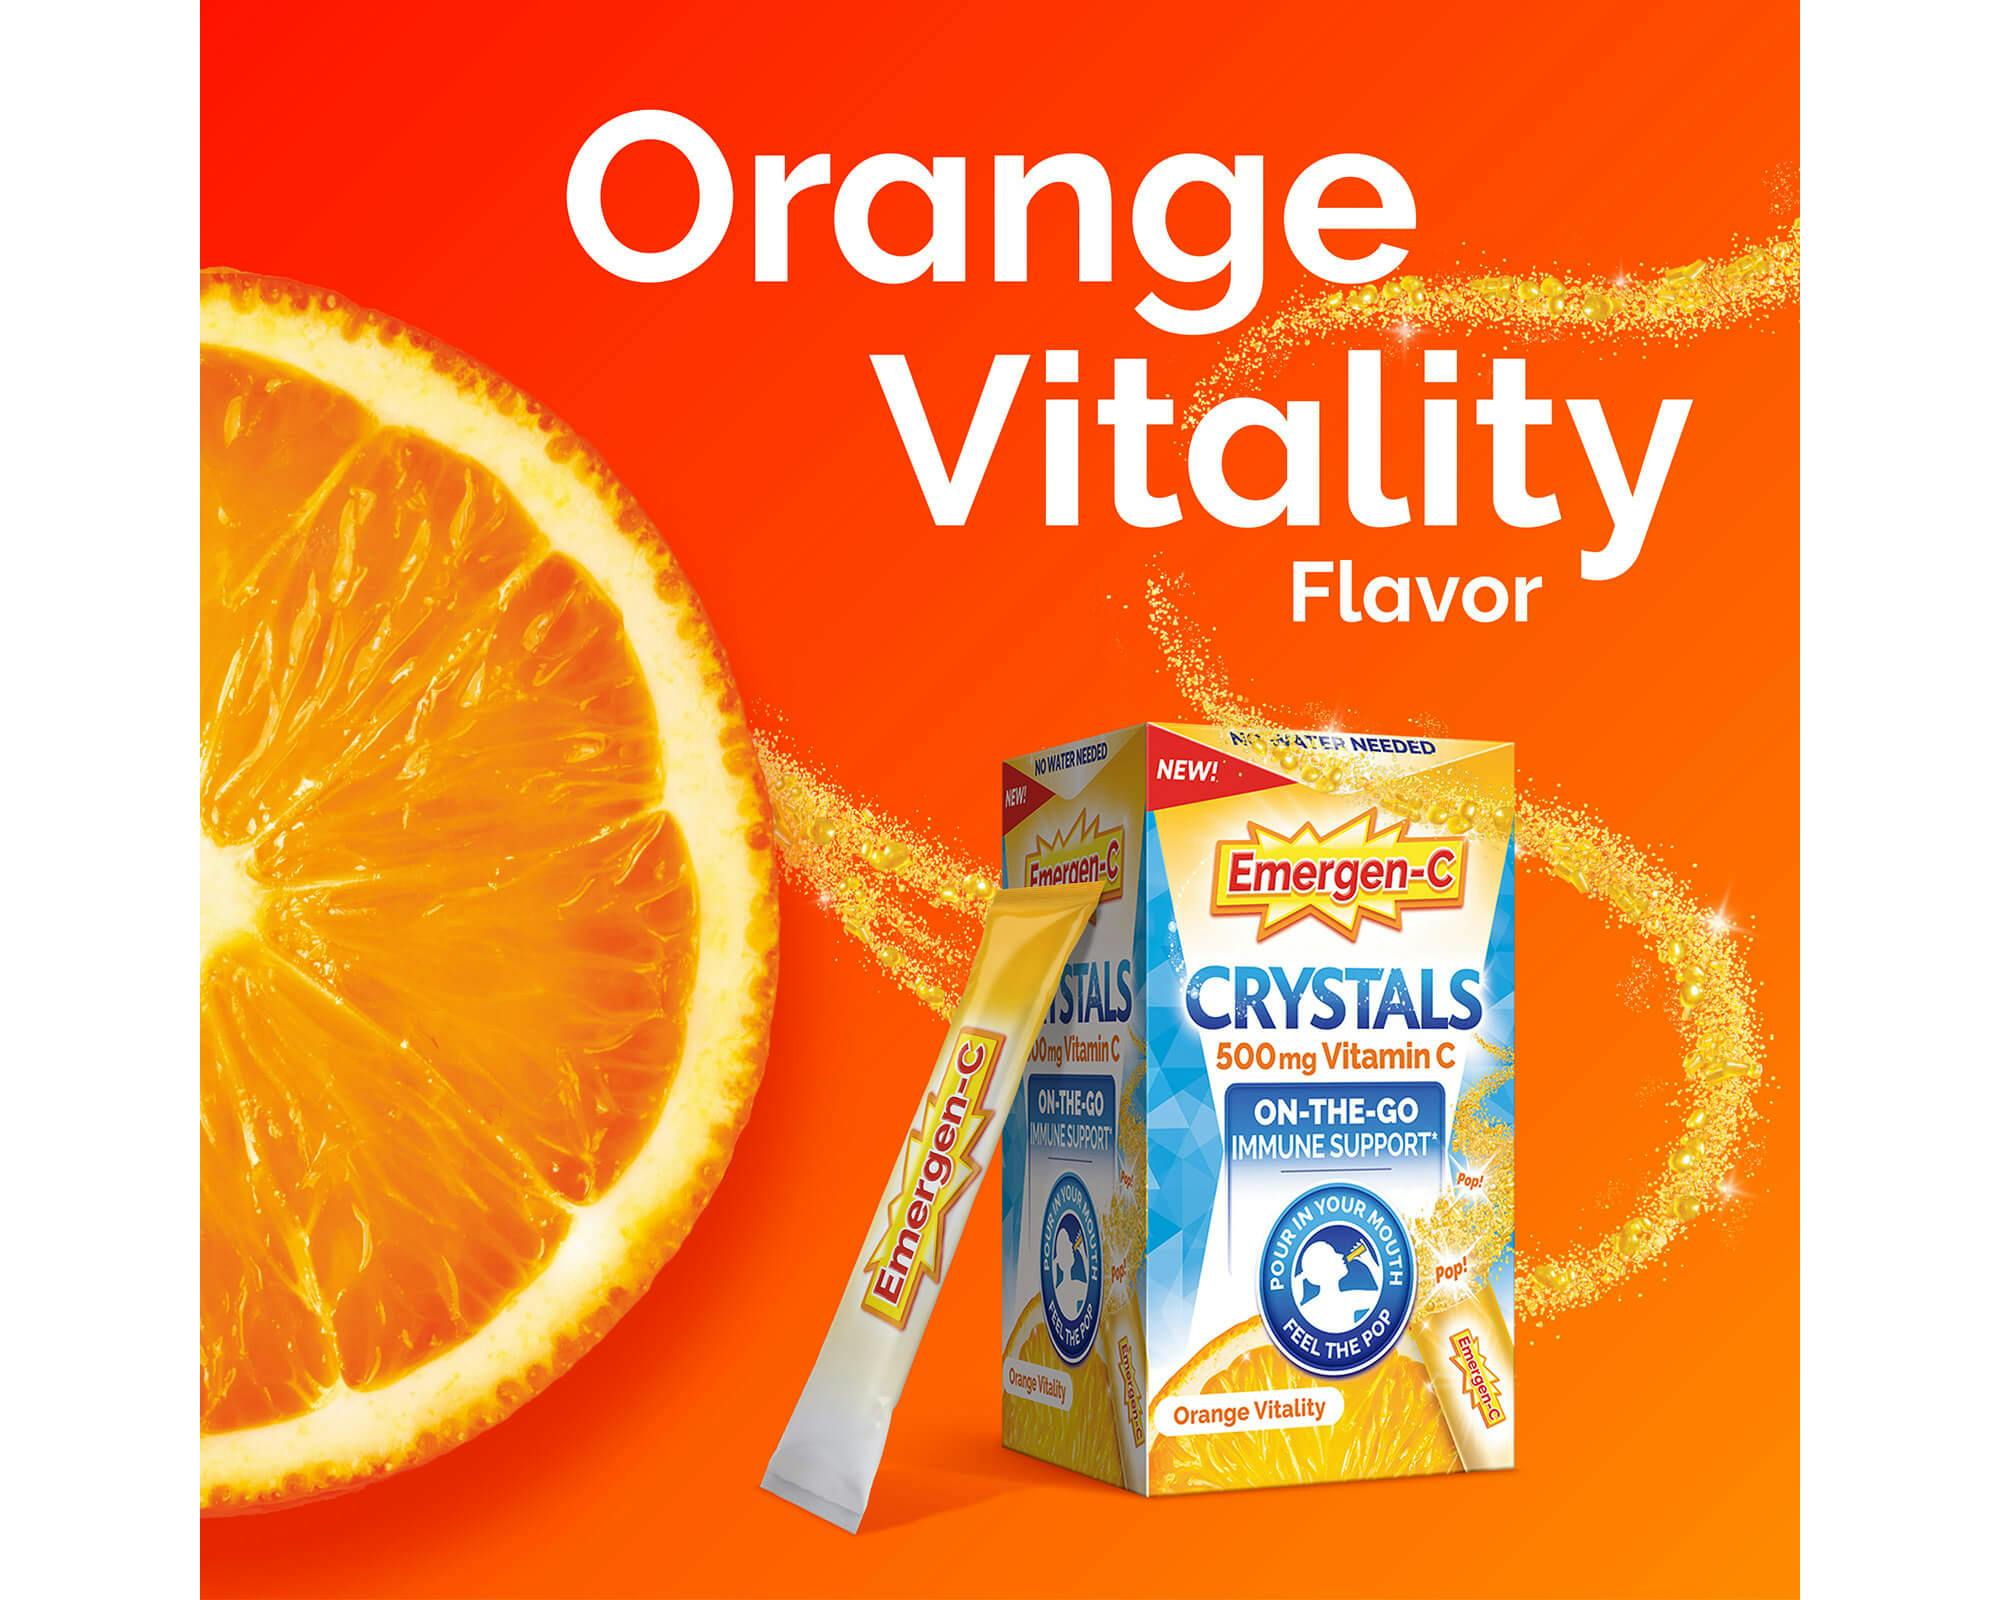 Emergen-C Crystals Orange Vitality product with orange